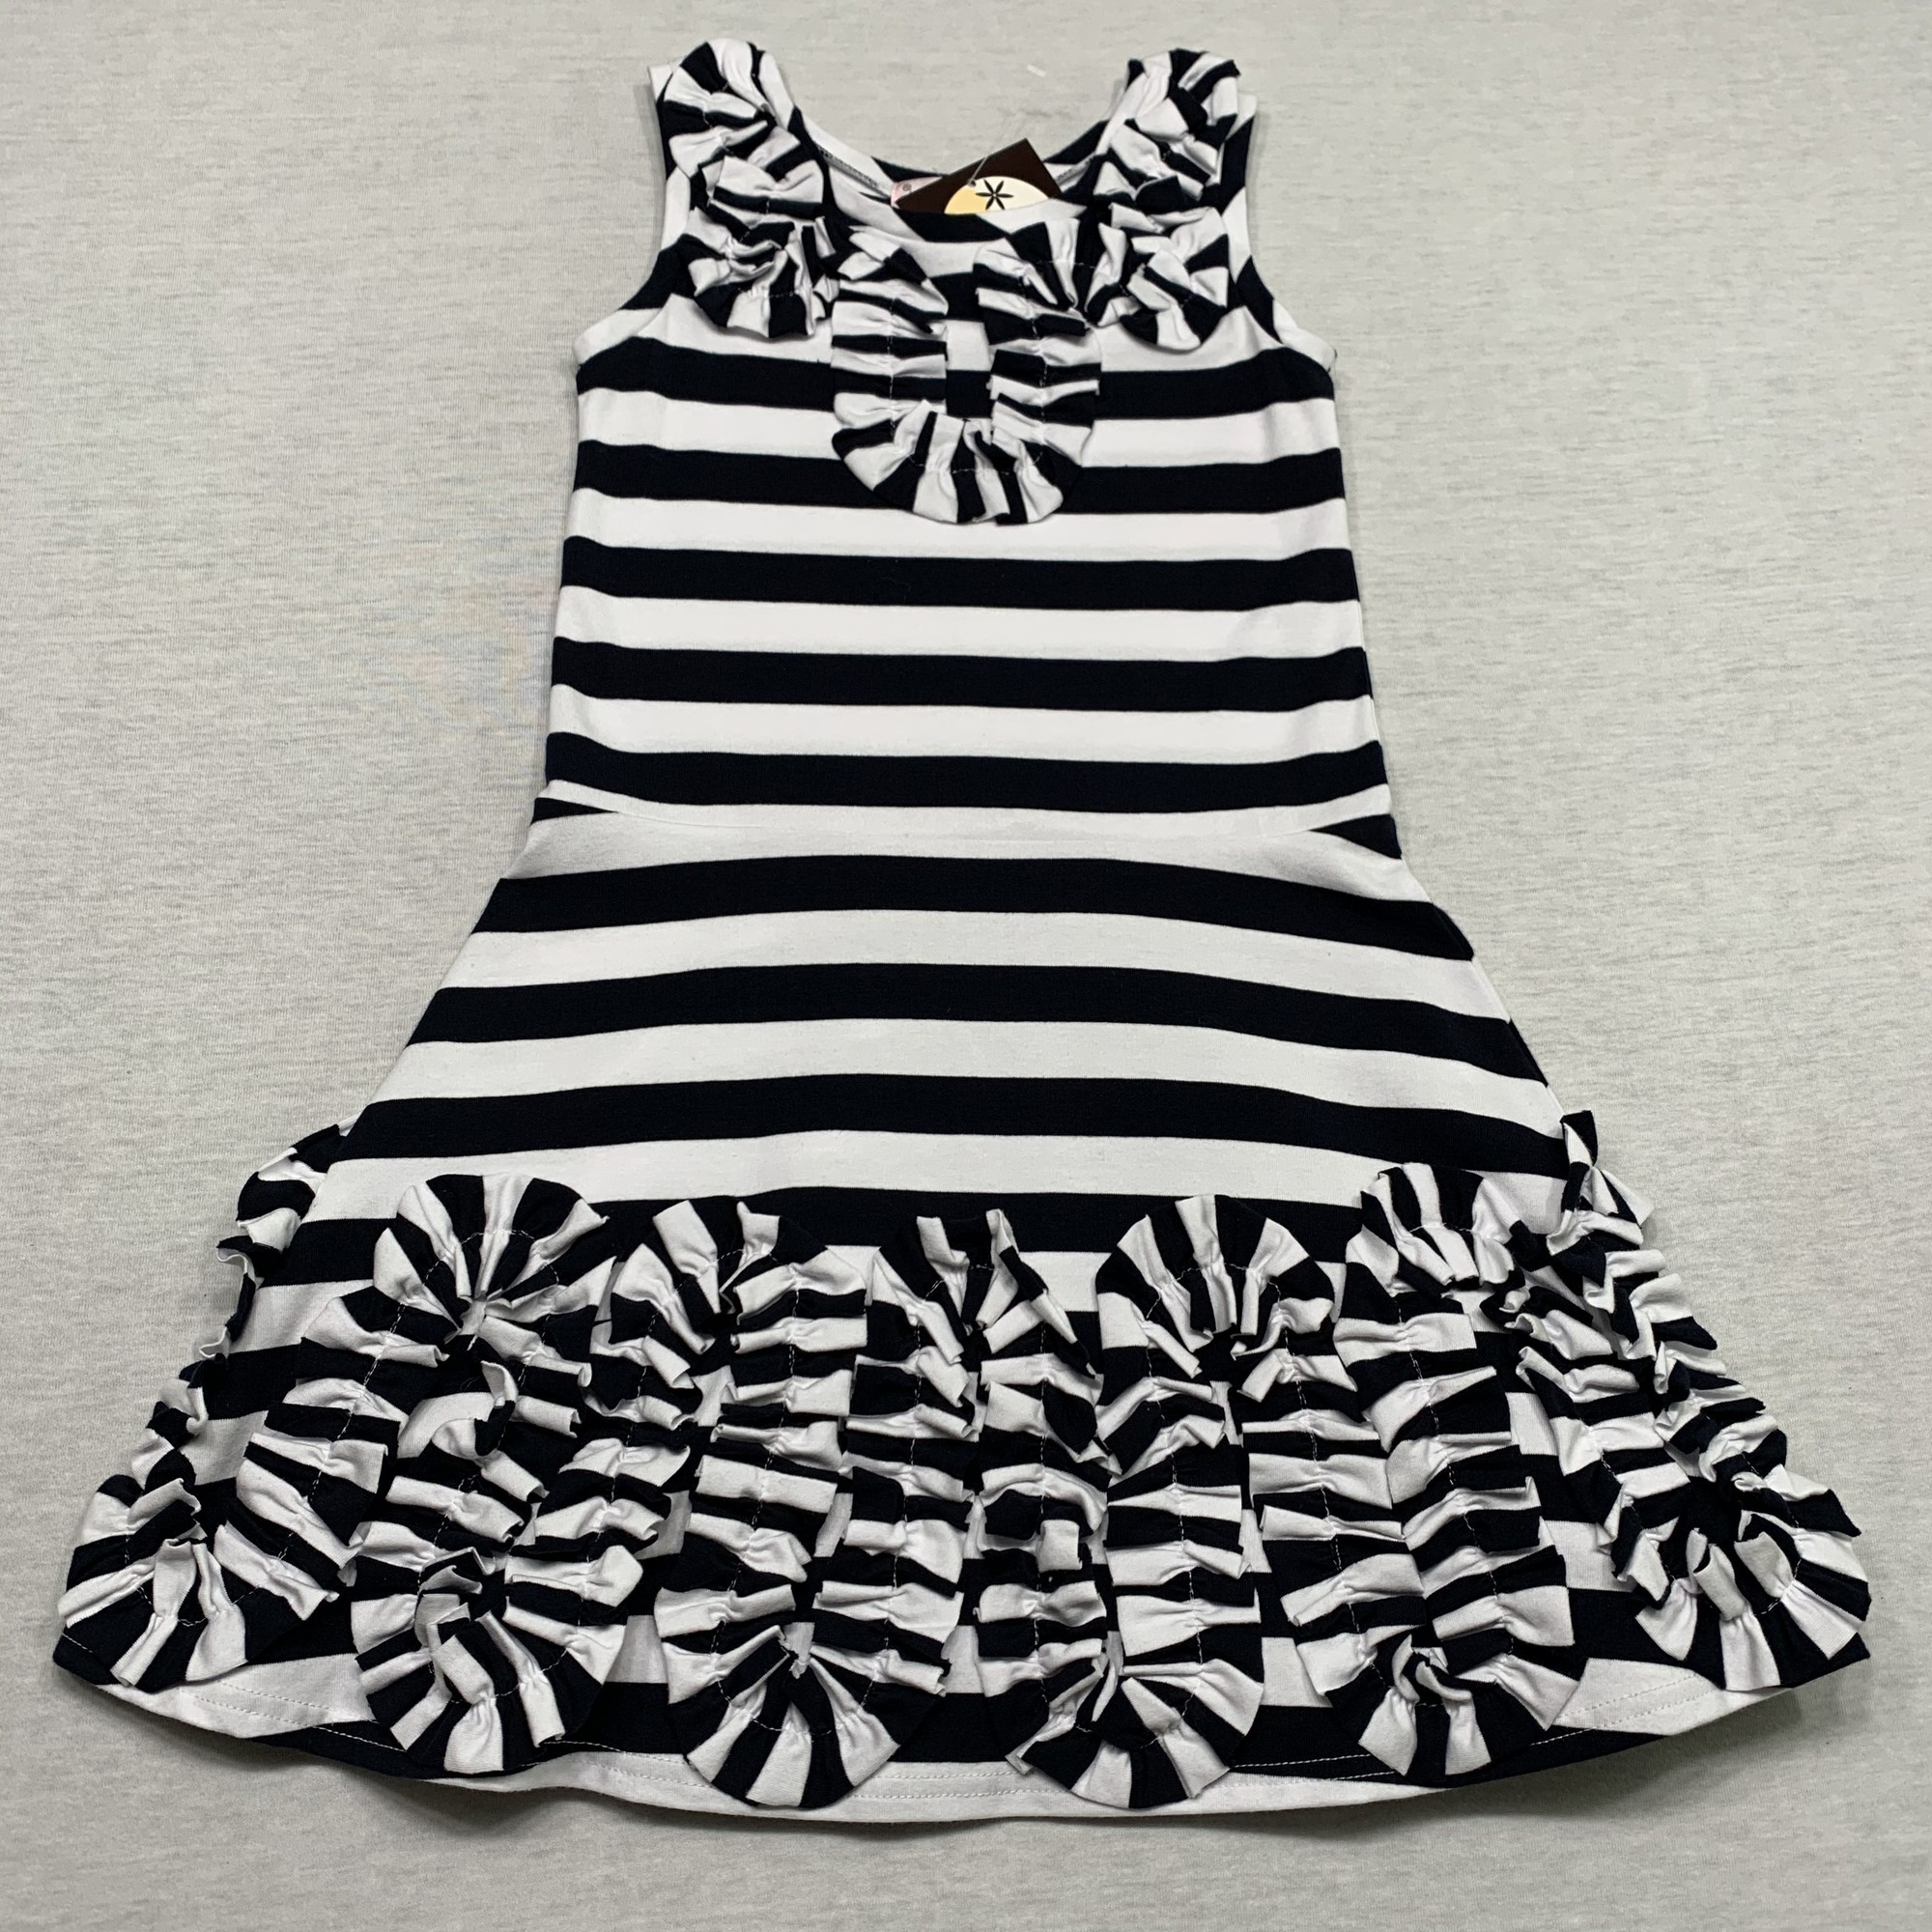 NWT Navy & white striped knit dress